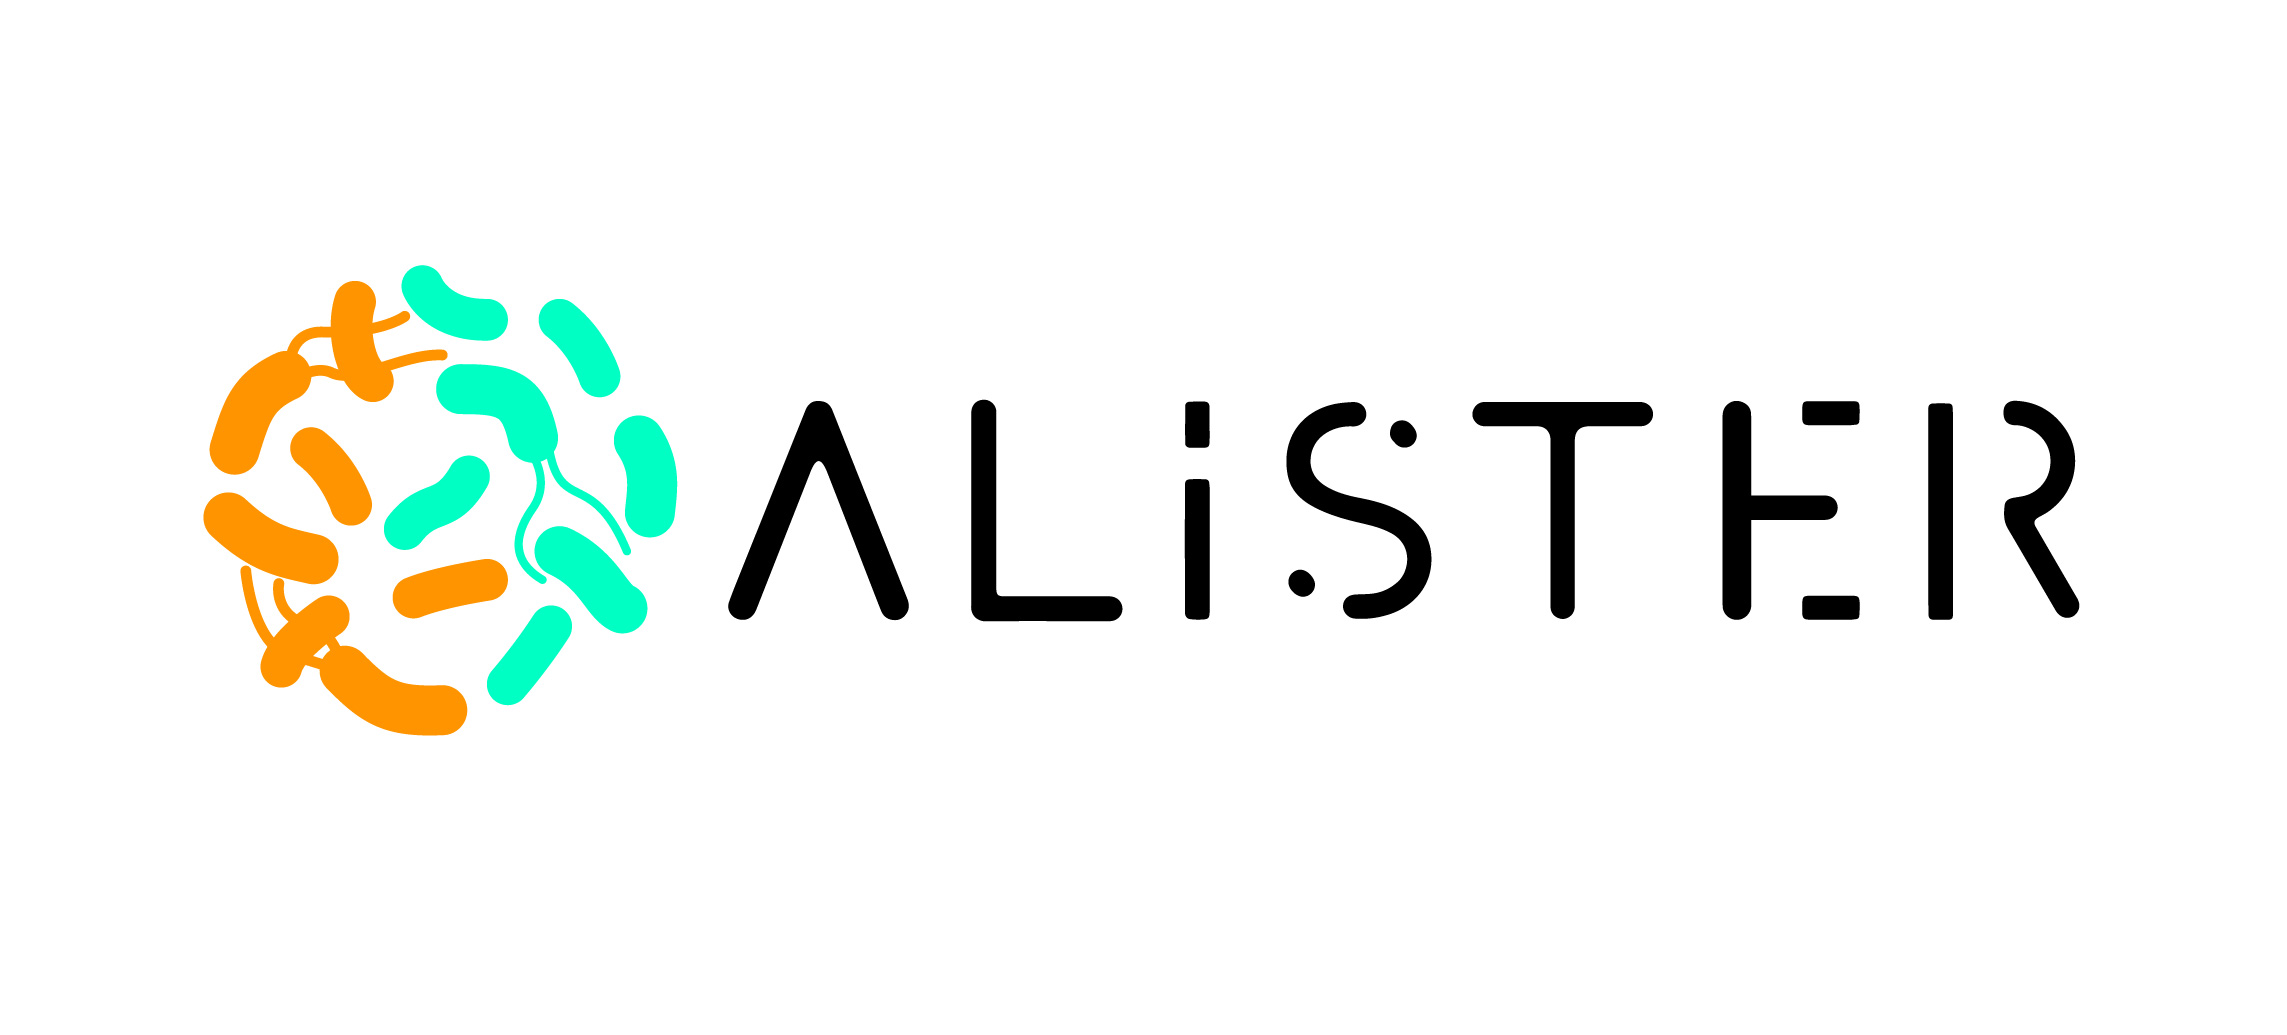 Logo Alister@600x 80